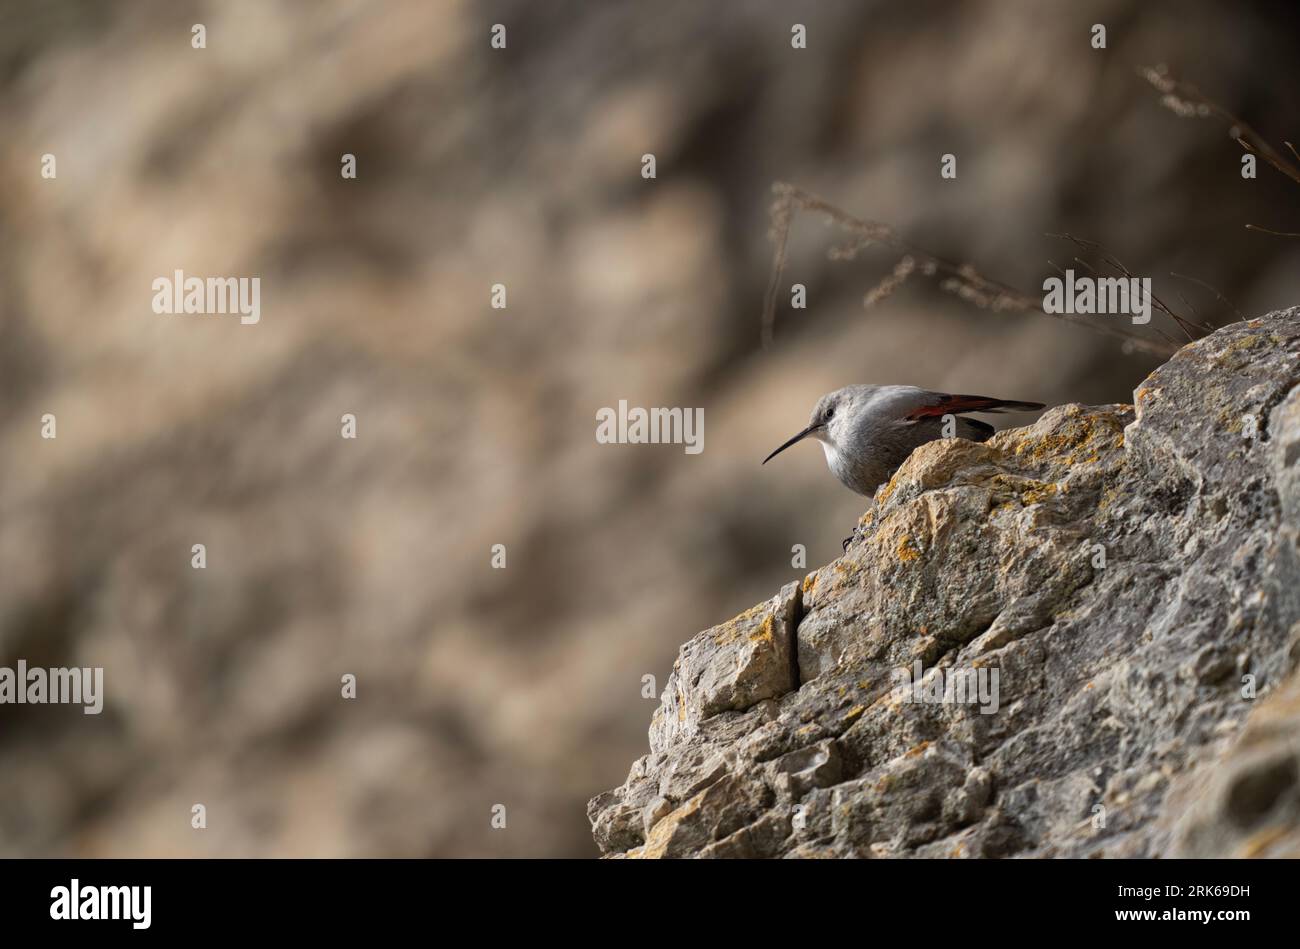 A small bird perches on a gray rock as it surveys its surroundings Stock Photo